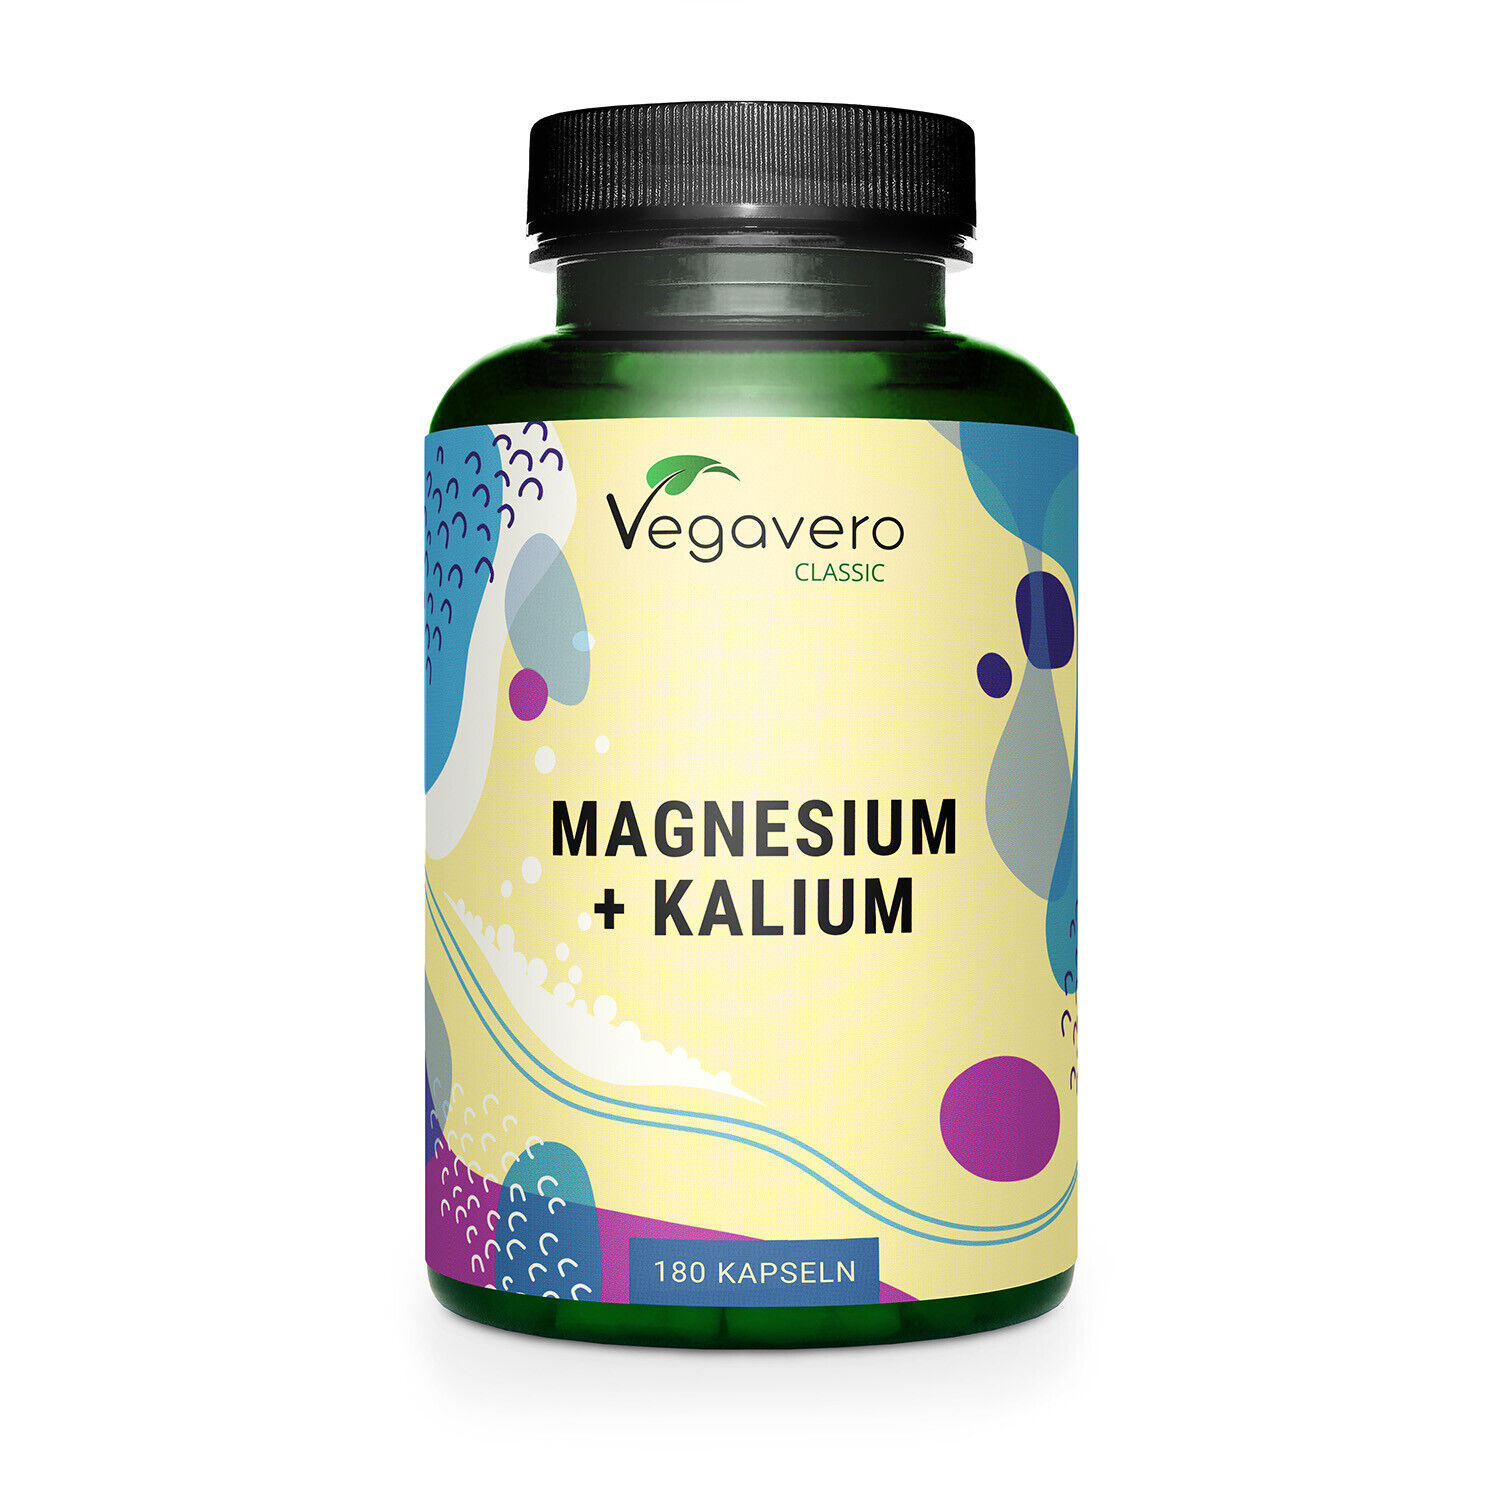 Vegavero Magnesium + Kalium | 180 Kapseln | bioverfügbare Citrat-Formen | vegan